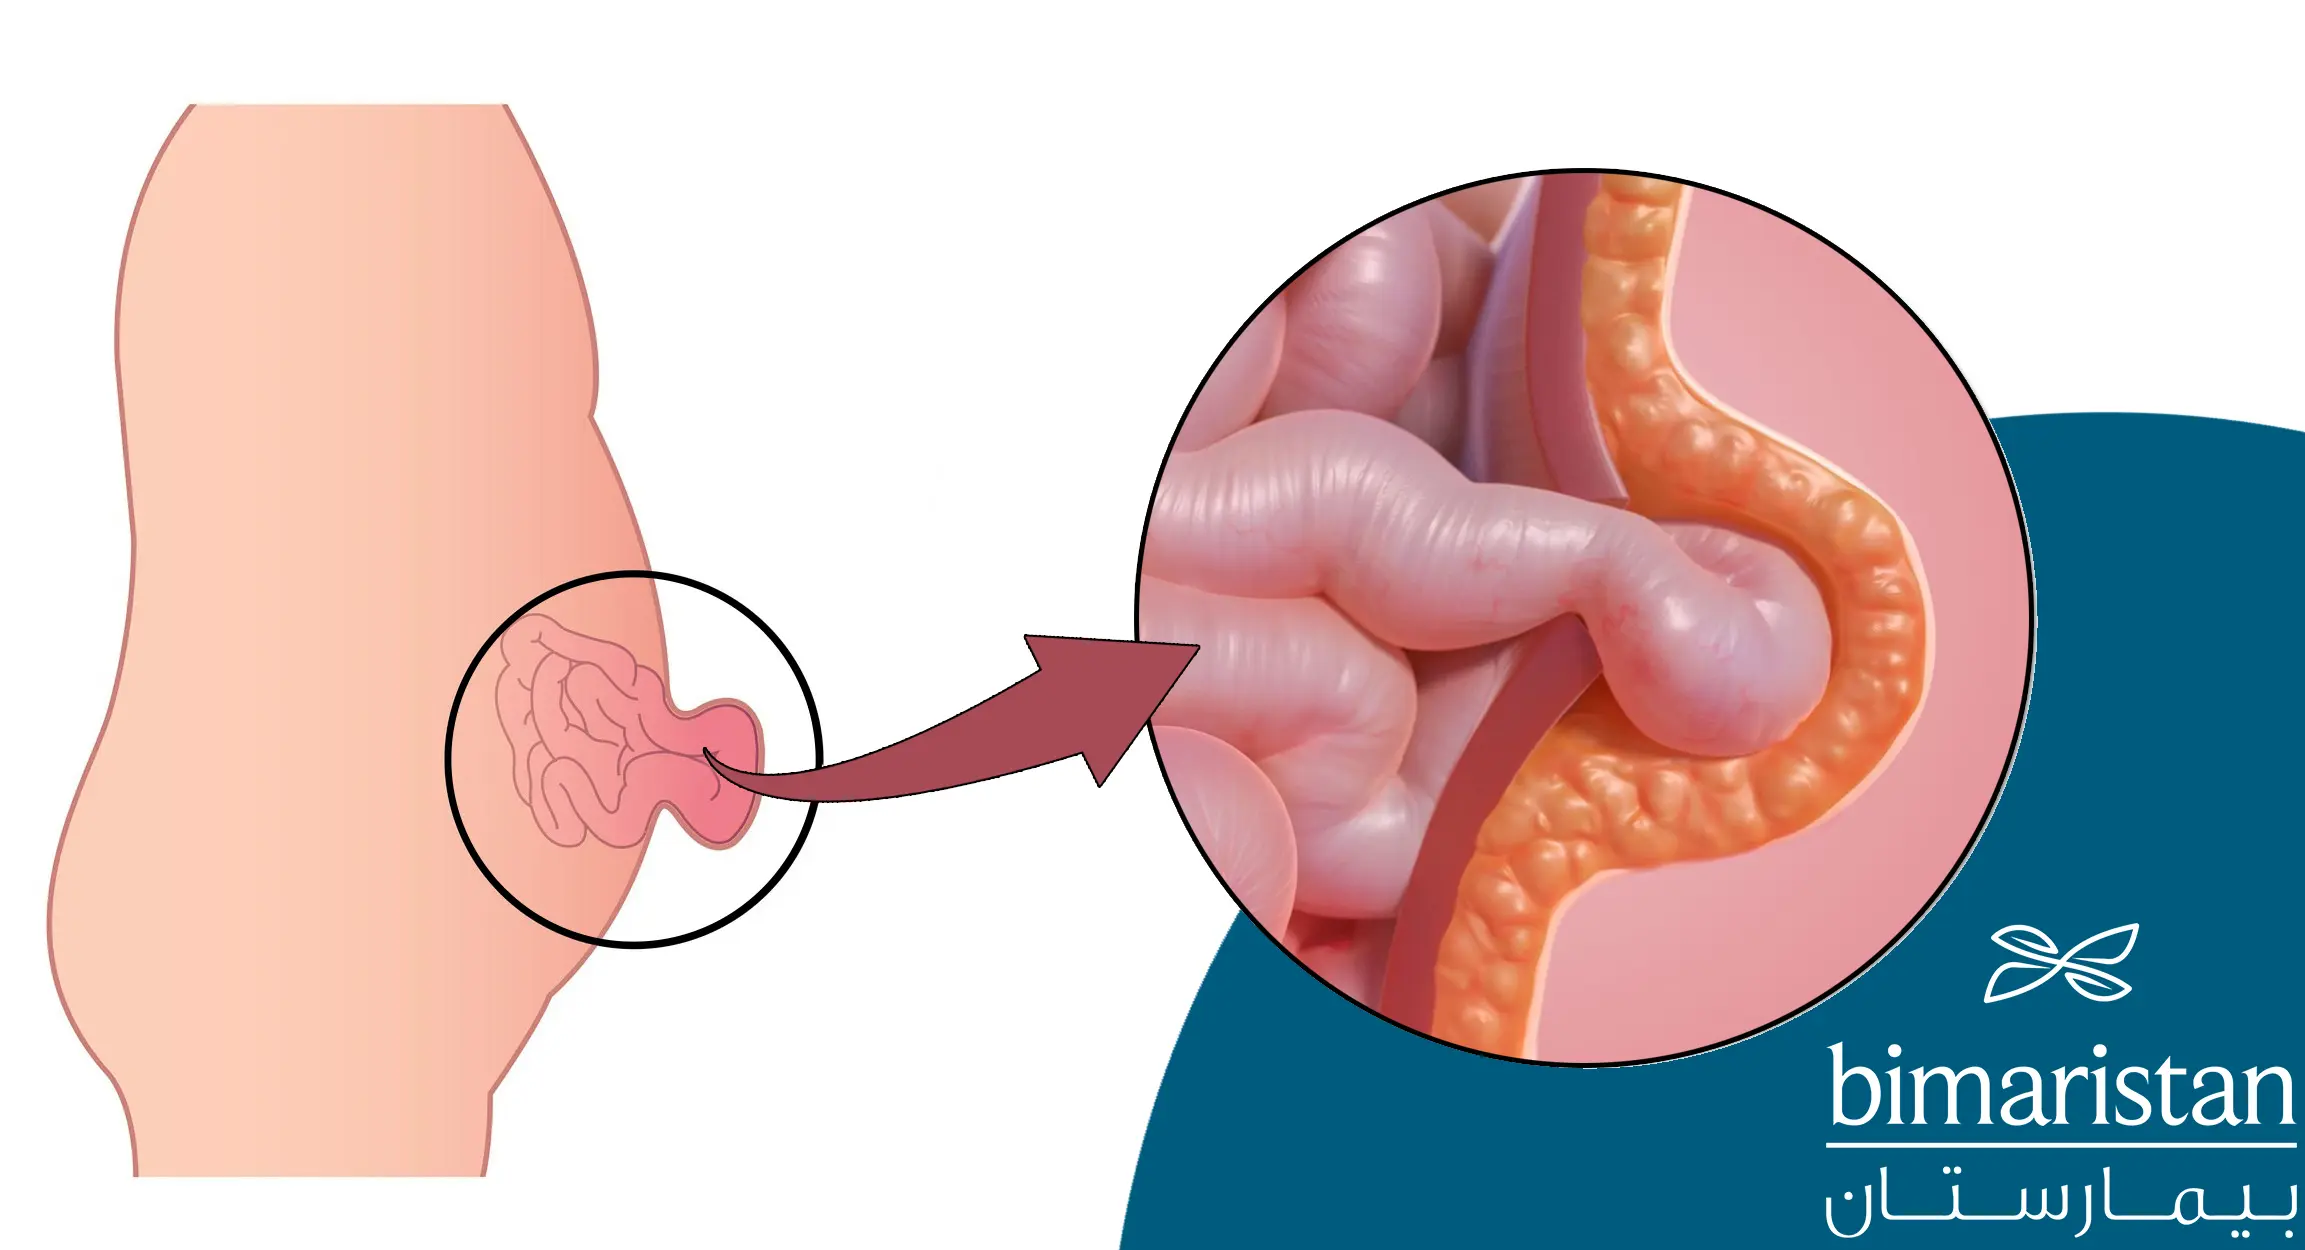 Diagram showing bowel herniation through the umbilicus